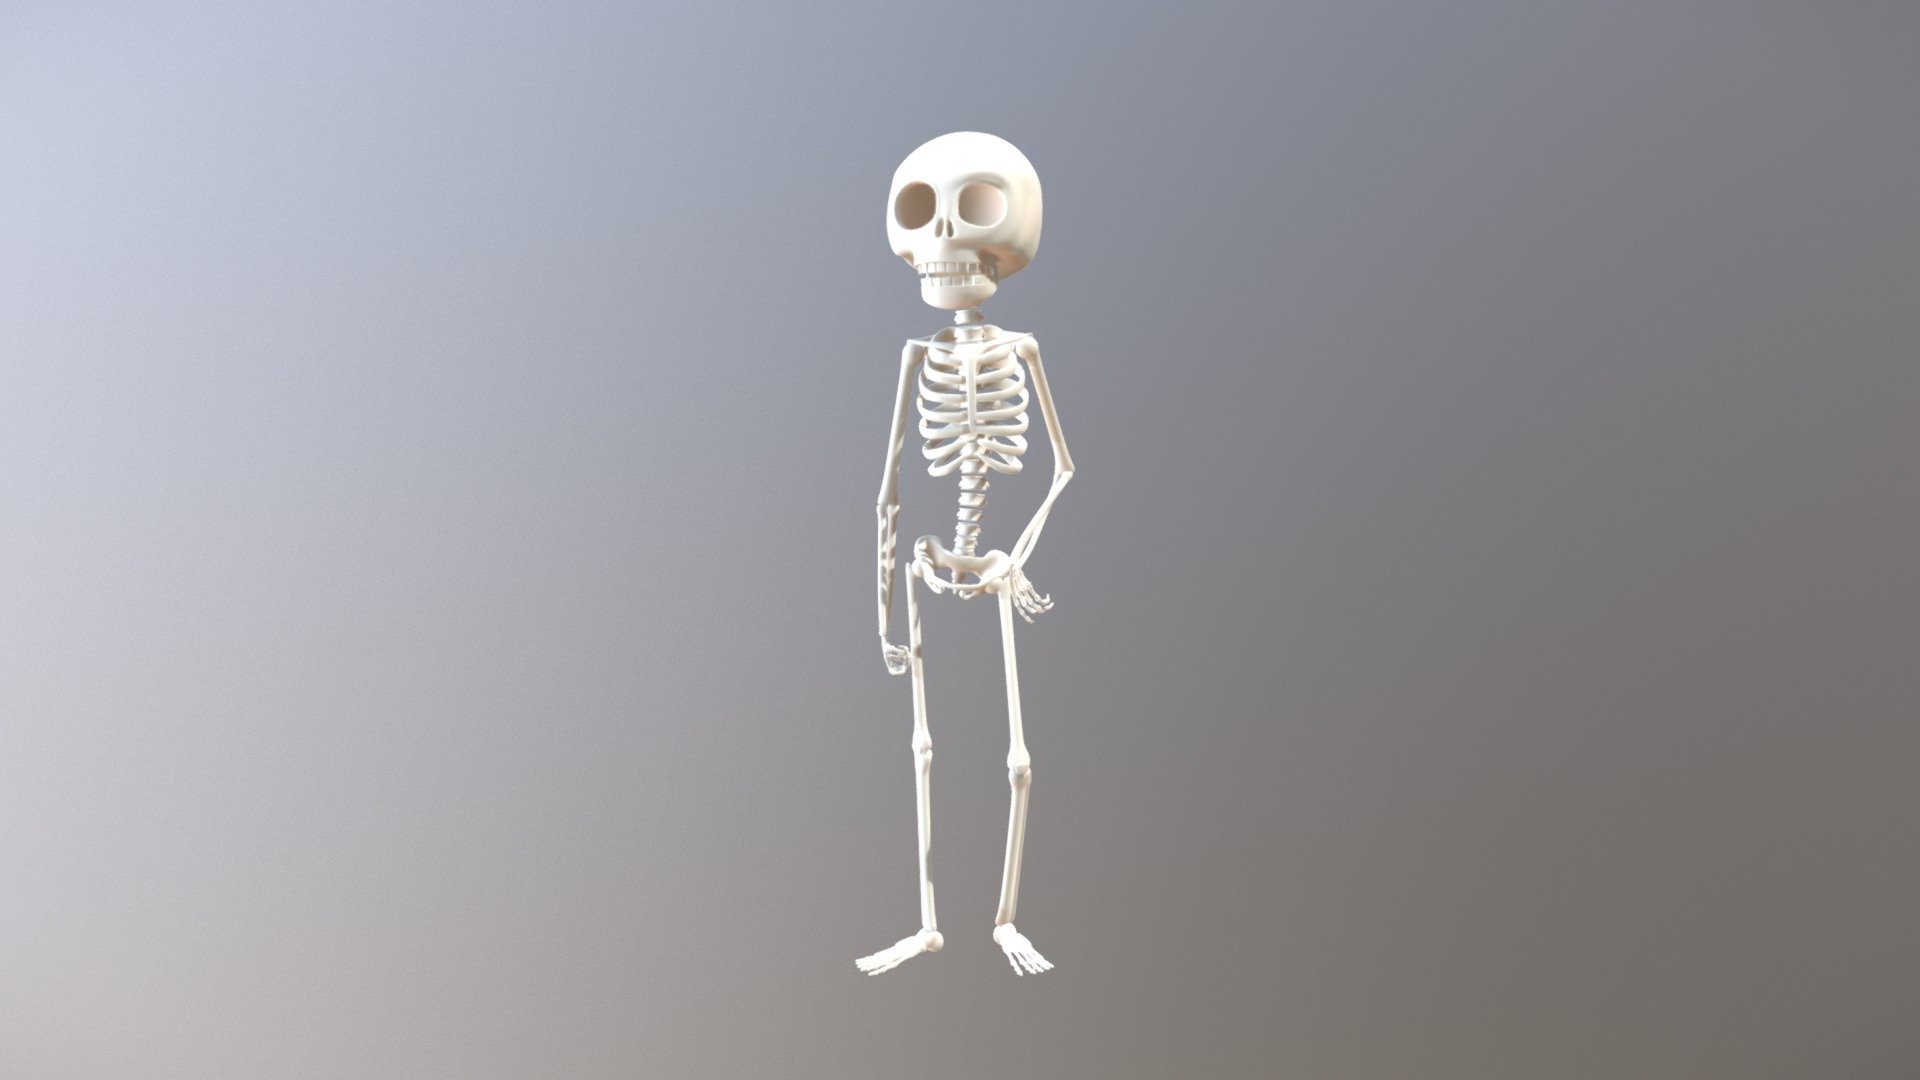 Created a 3D stylized skeleon model in spirit of Halloween! Modeled/rigged in Autodesk Maya. More renders: https://www.artstation.com/artwork/BG2Kr - Stylized 3D Skeleton Model - 3D model by Abraham Mast (@abrahammast) 3d model